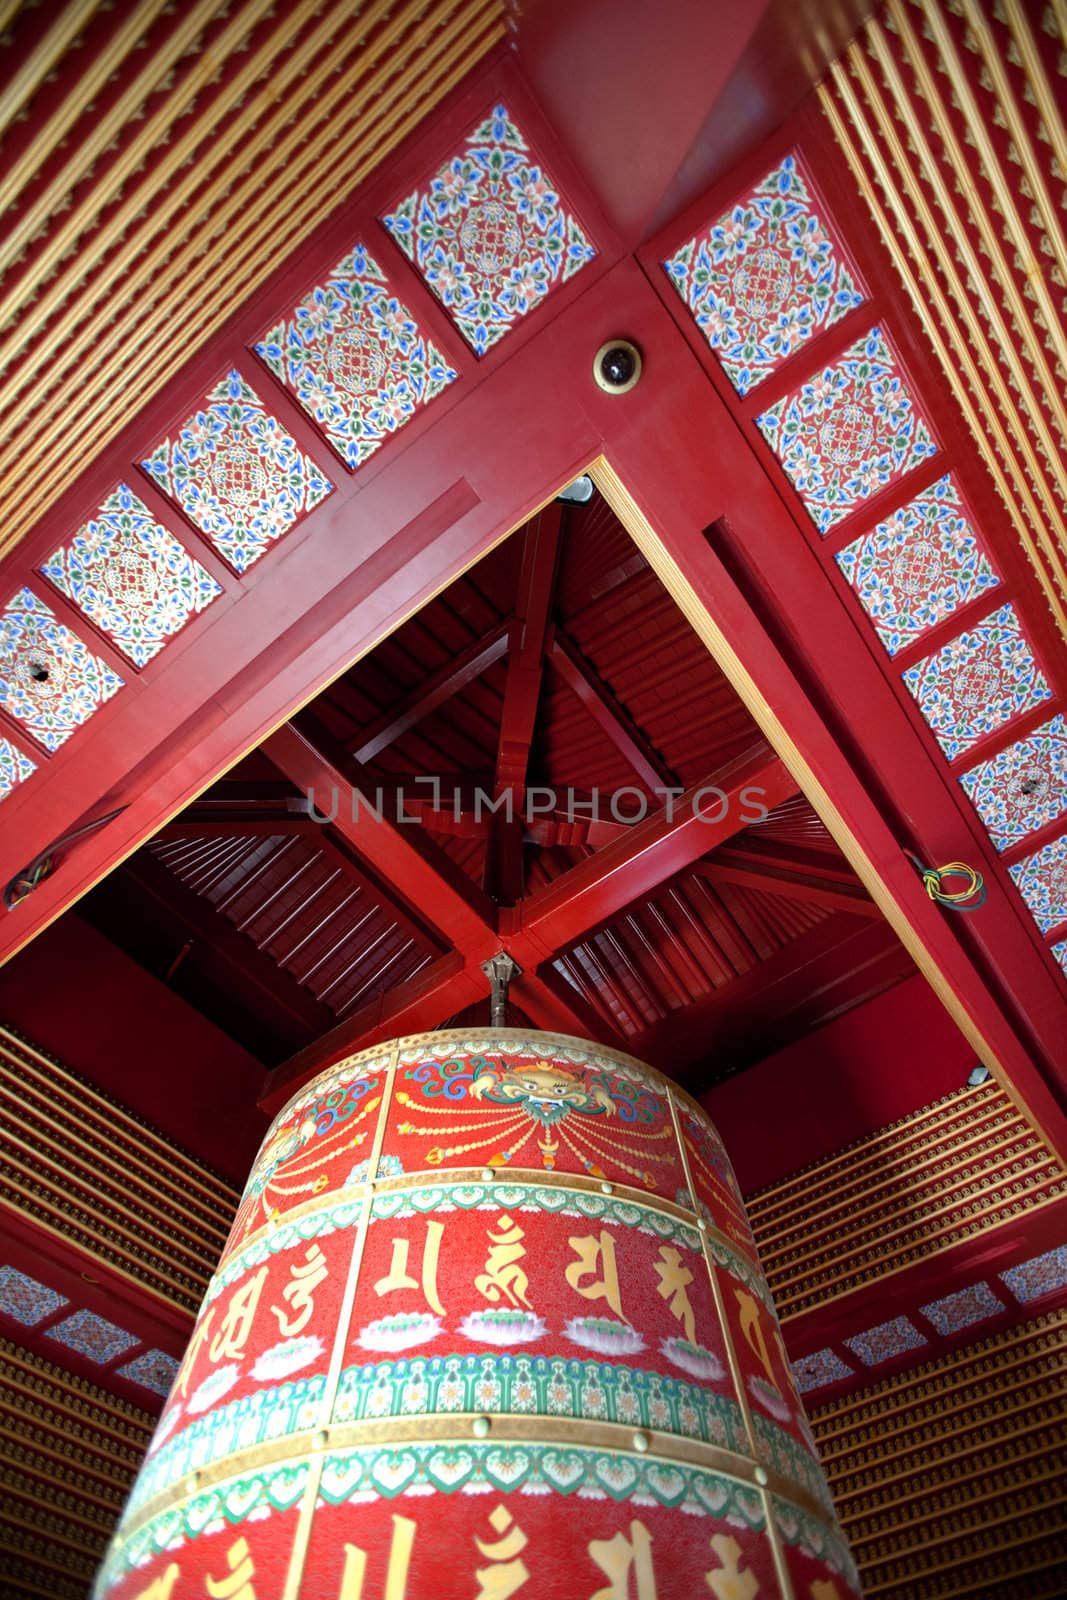 A very large buddhist prayer wheel